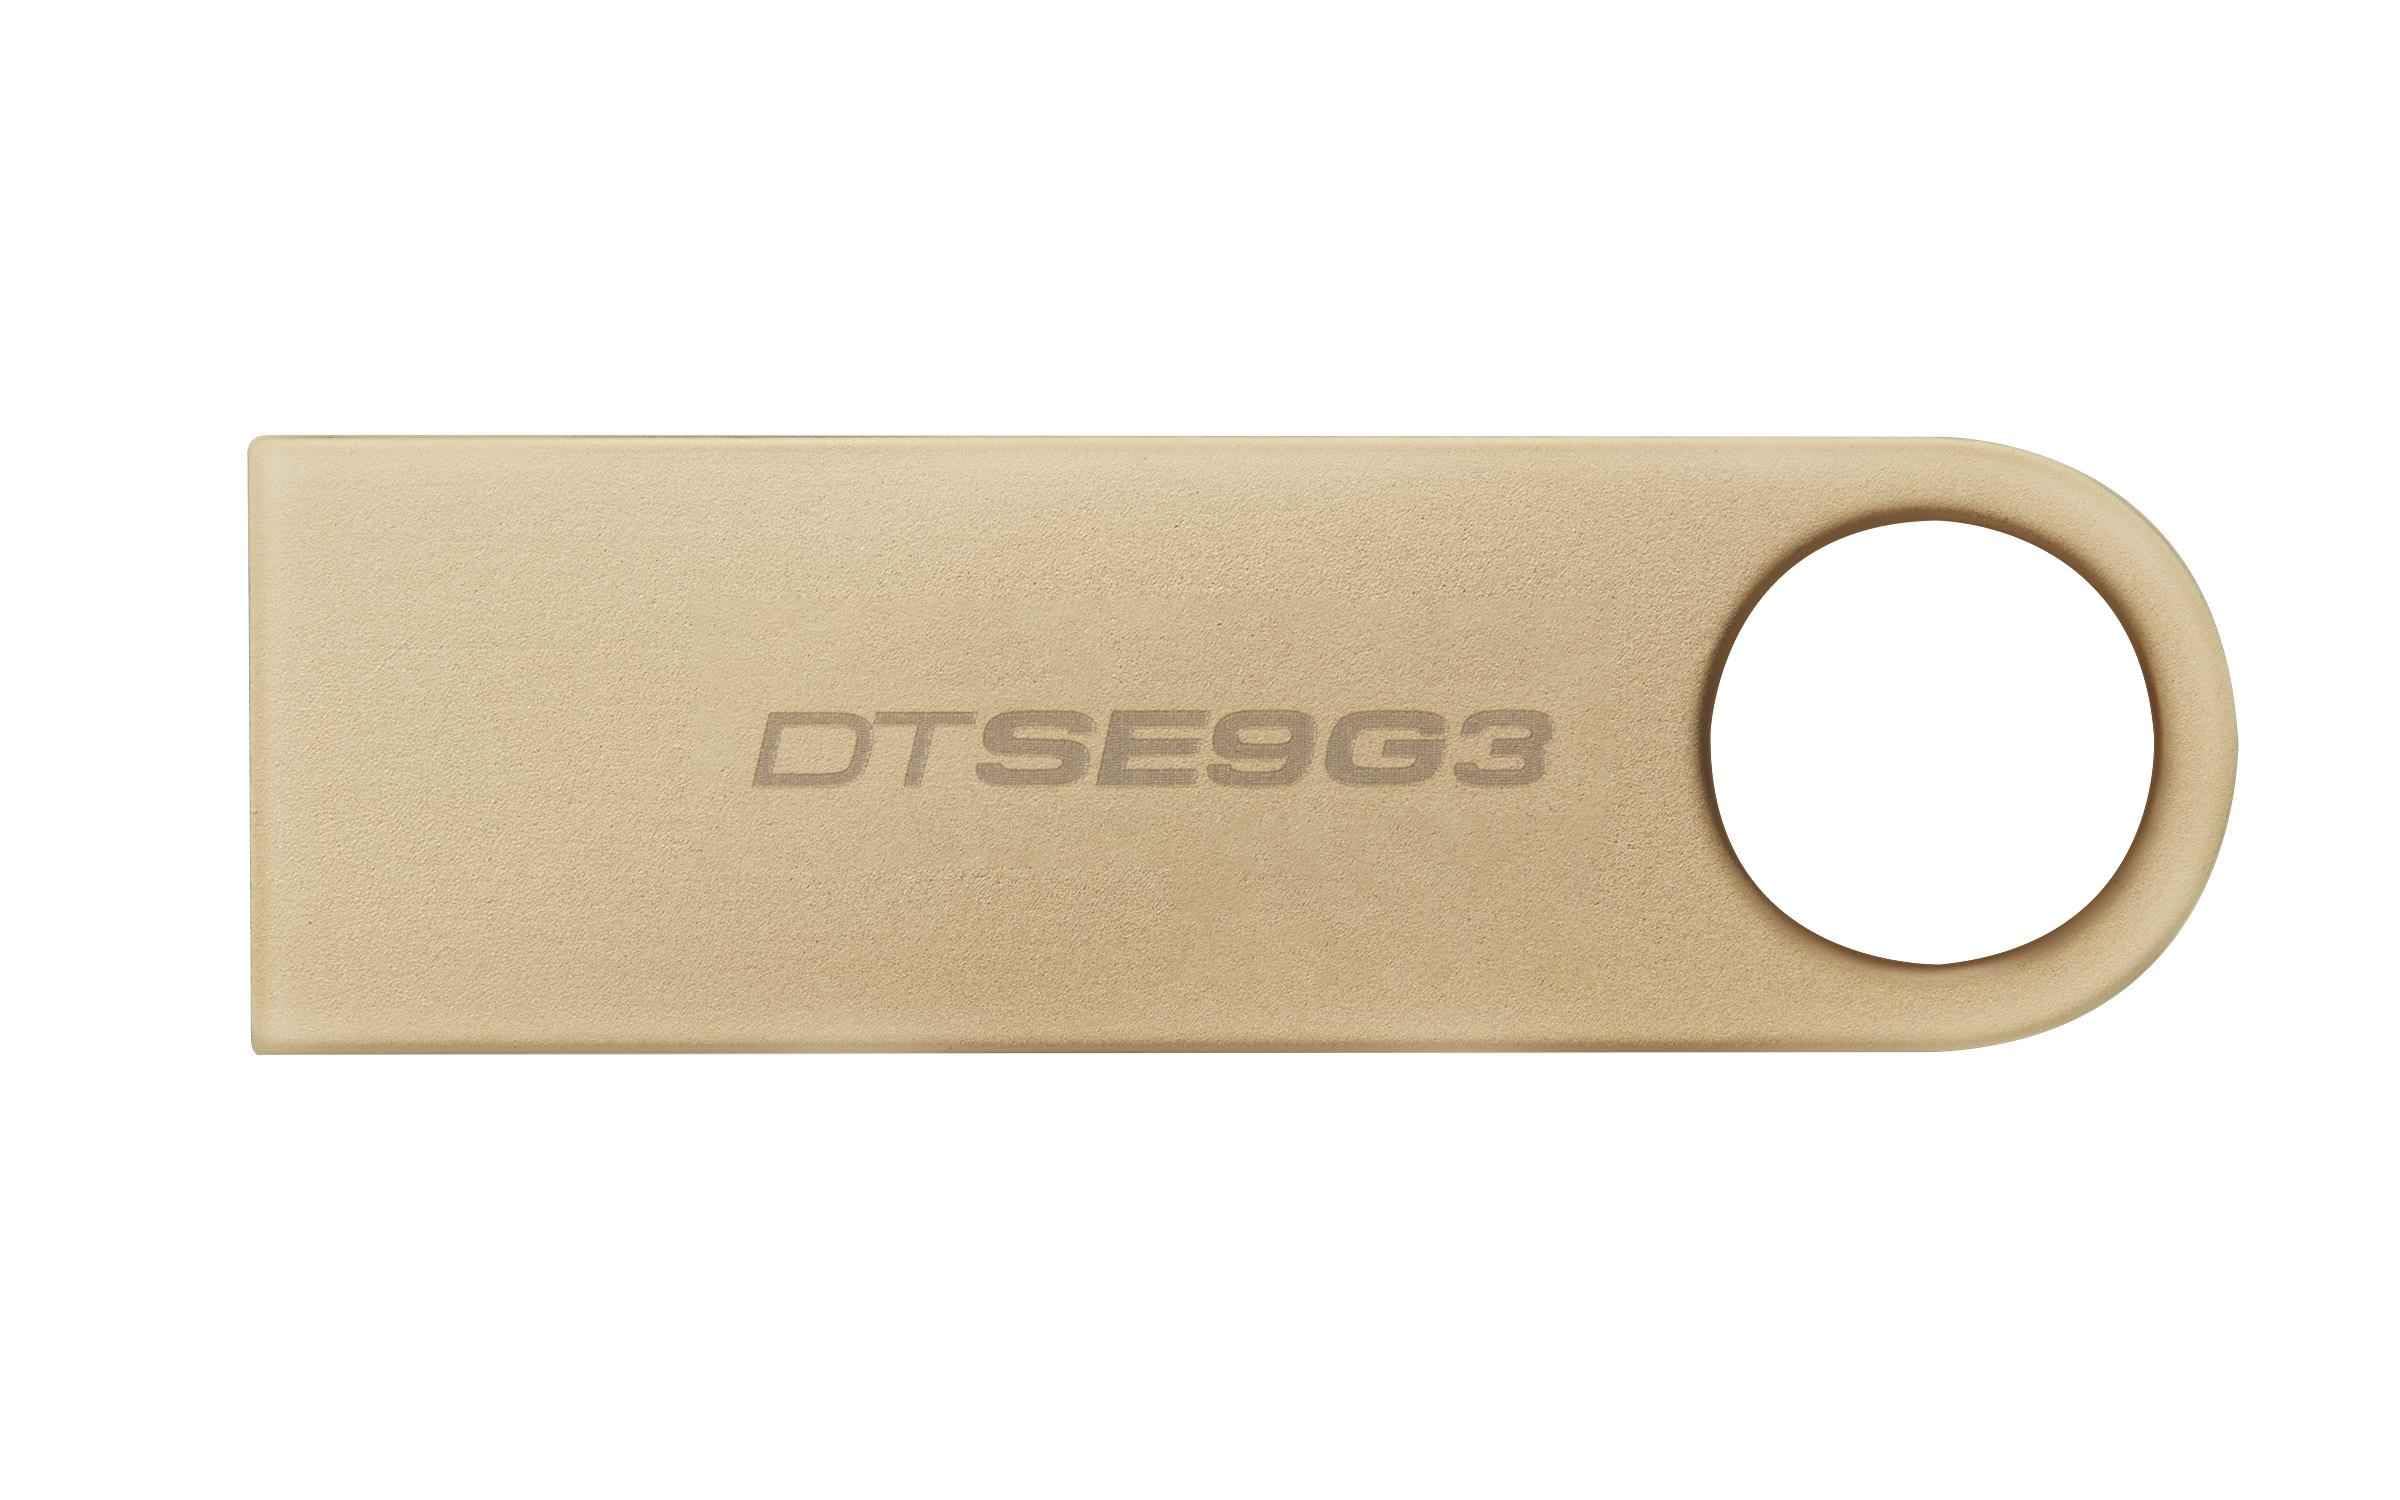 Kingston DataTraveler SE9 G3 256GB USB Flash Drive | USB 3.2 Gen 1 Speed | Up to 220MB/s | Premium Metal Casing | DTSE9G3/256GB